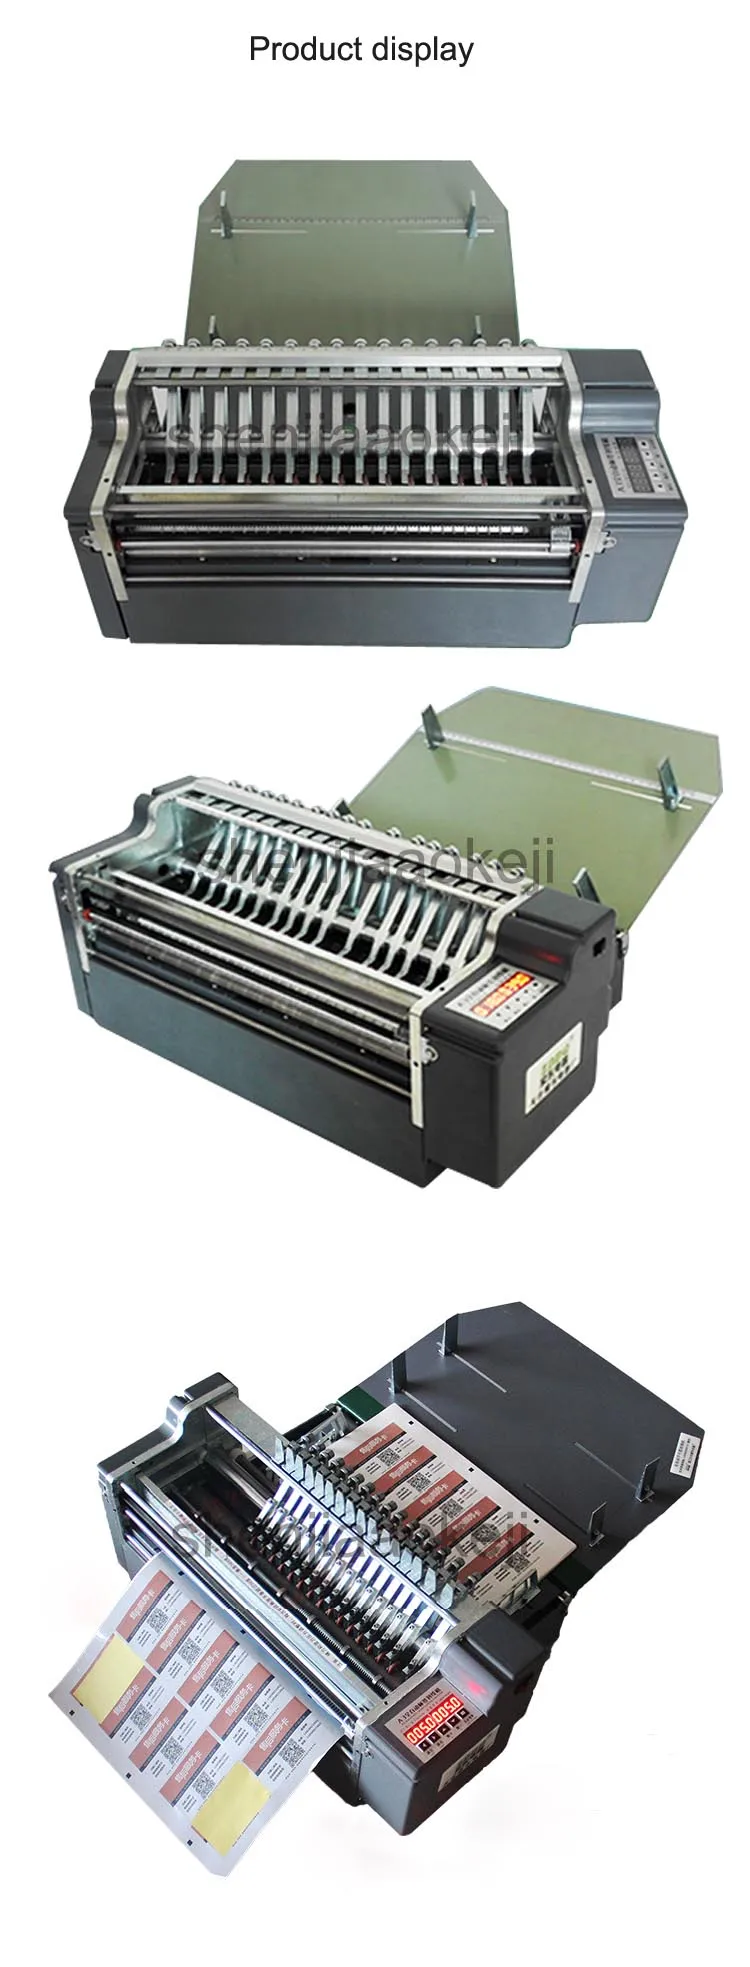 Автомат для резки этикеток Размера A3, автоматическая машина для резки этикеток, автоматическая машина для резки этикеток